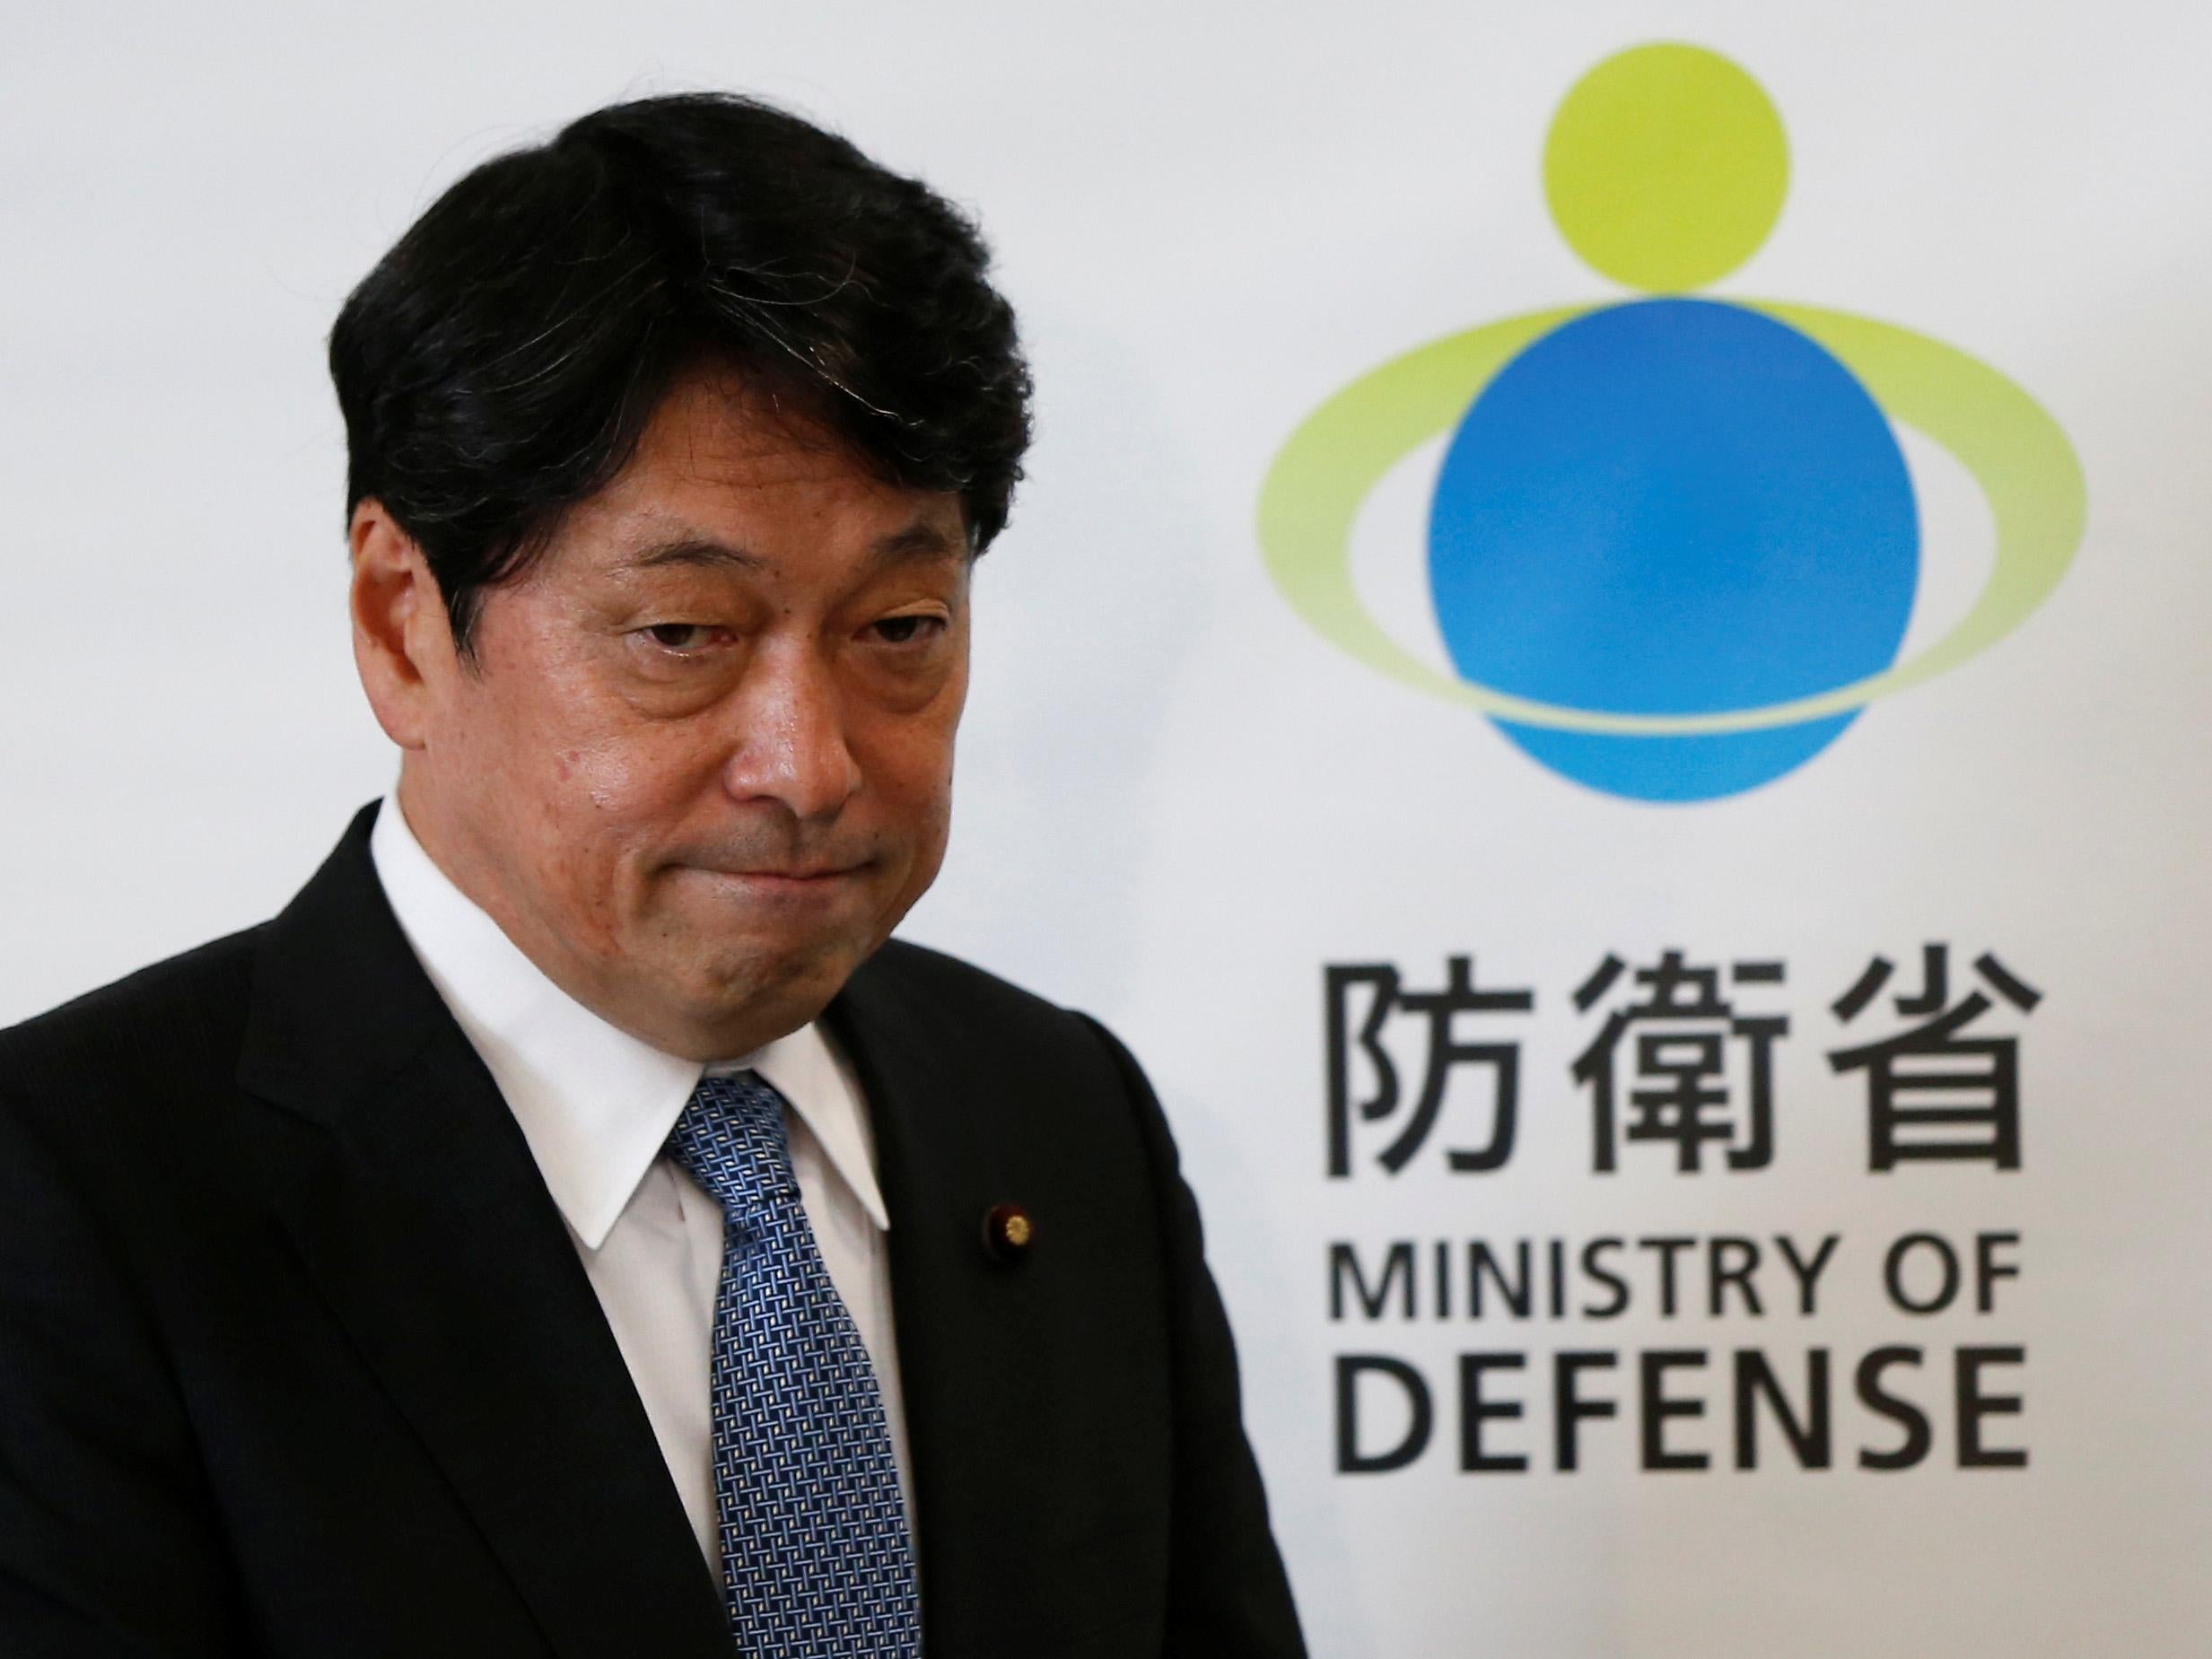 Japan's Defence Minister Itsunori Onodera